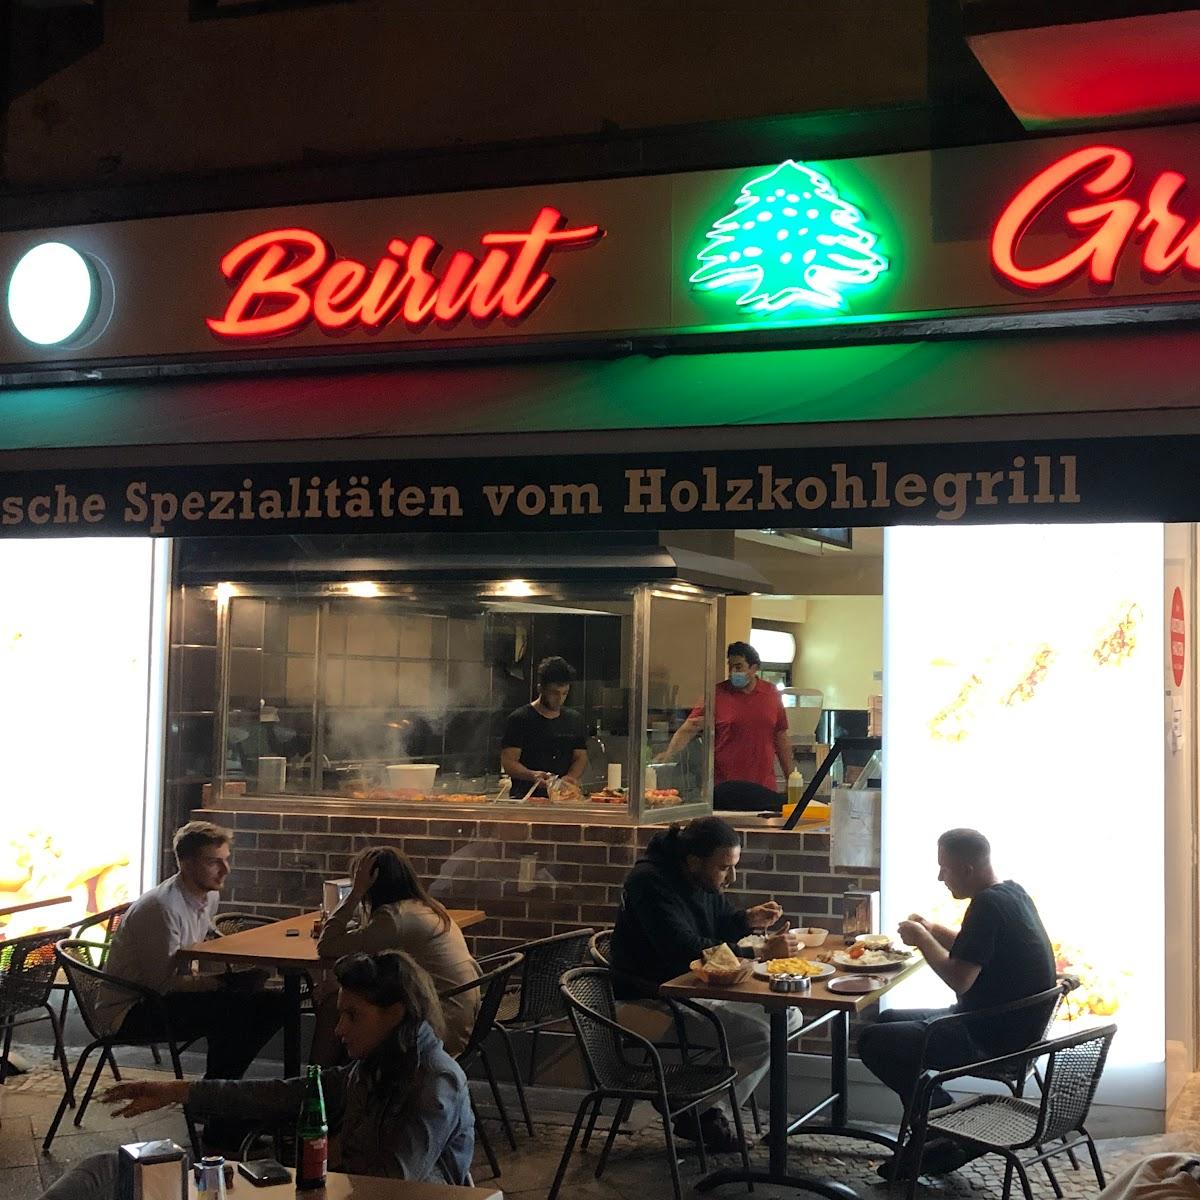 Restaurant "Beirut Grill" in Berlin